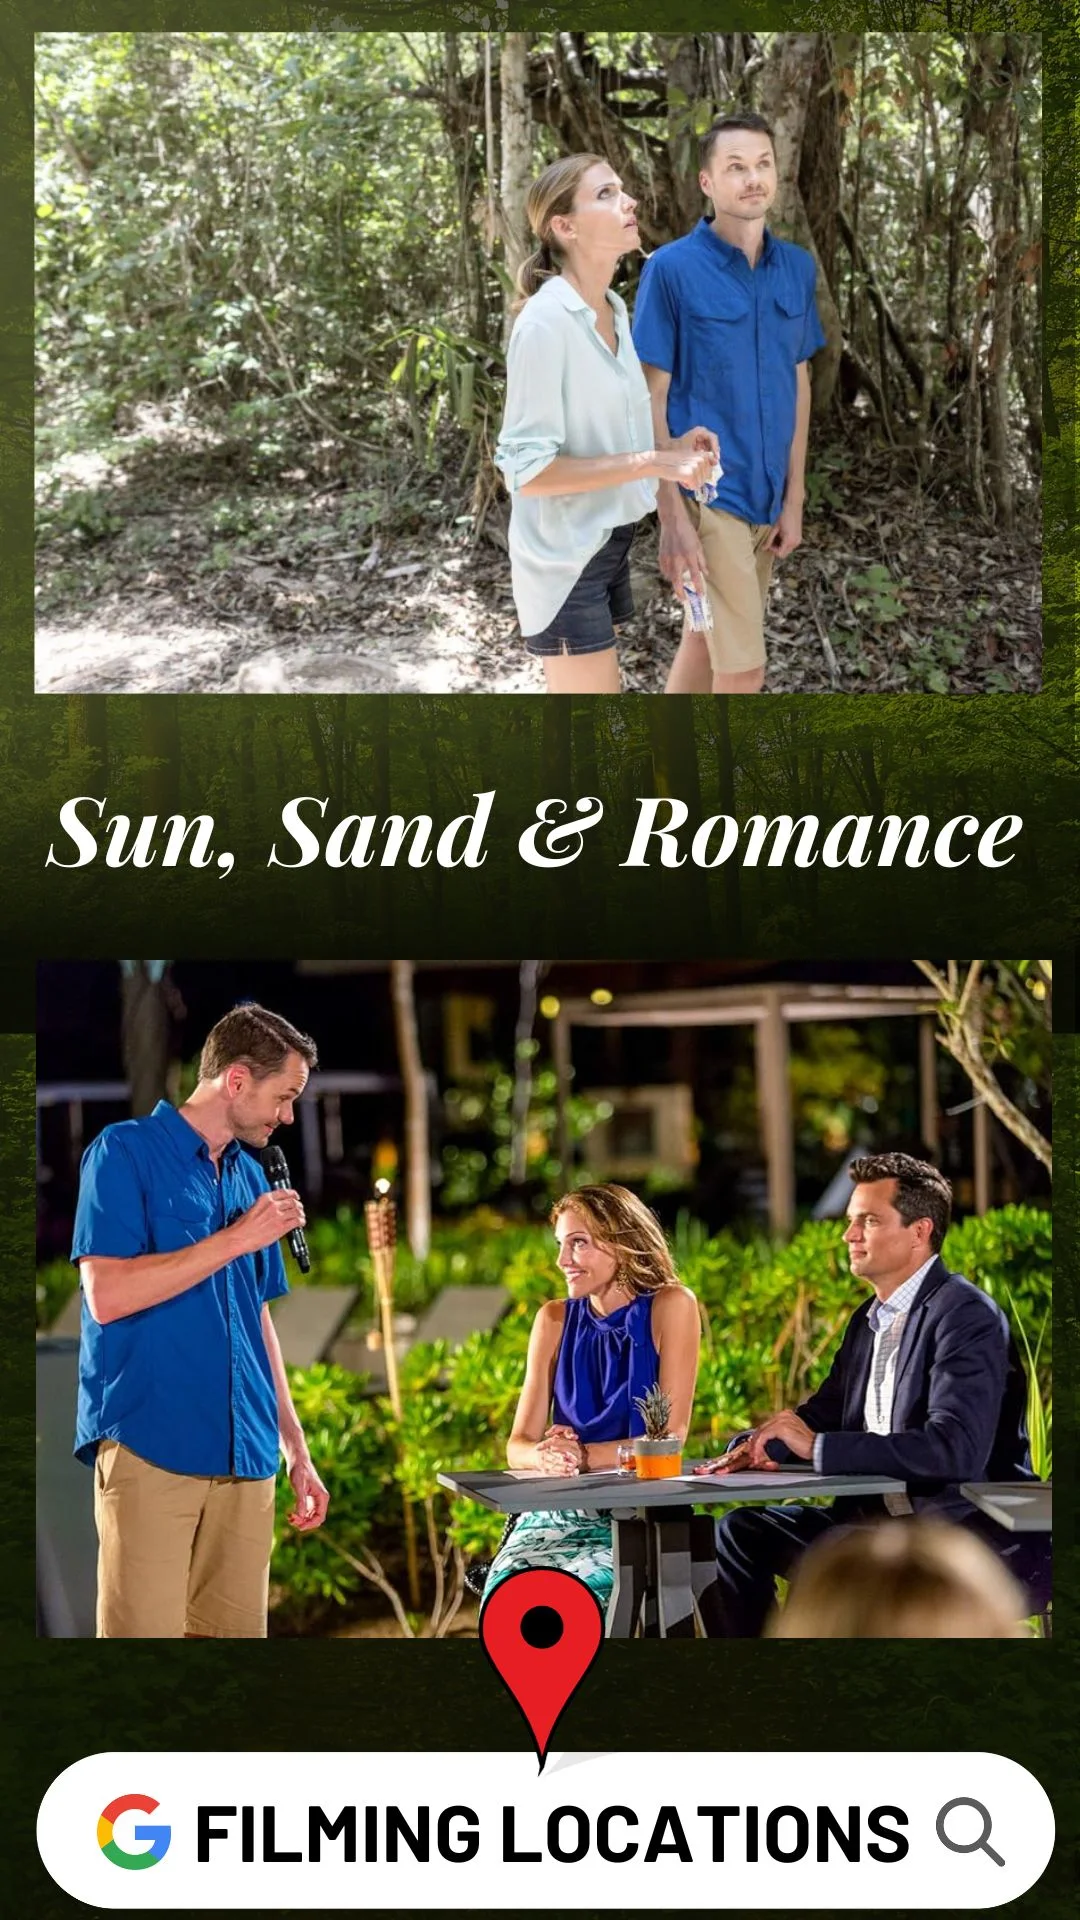 Sun, Sand & Romance Filming Locations